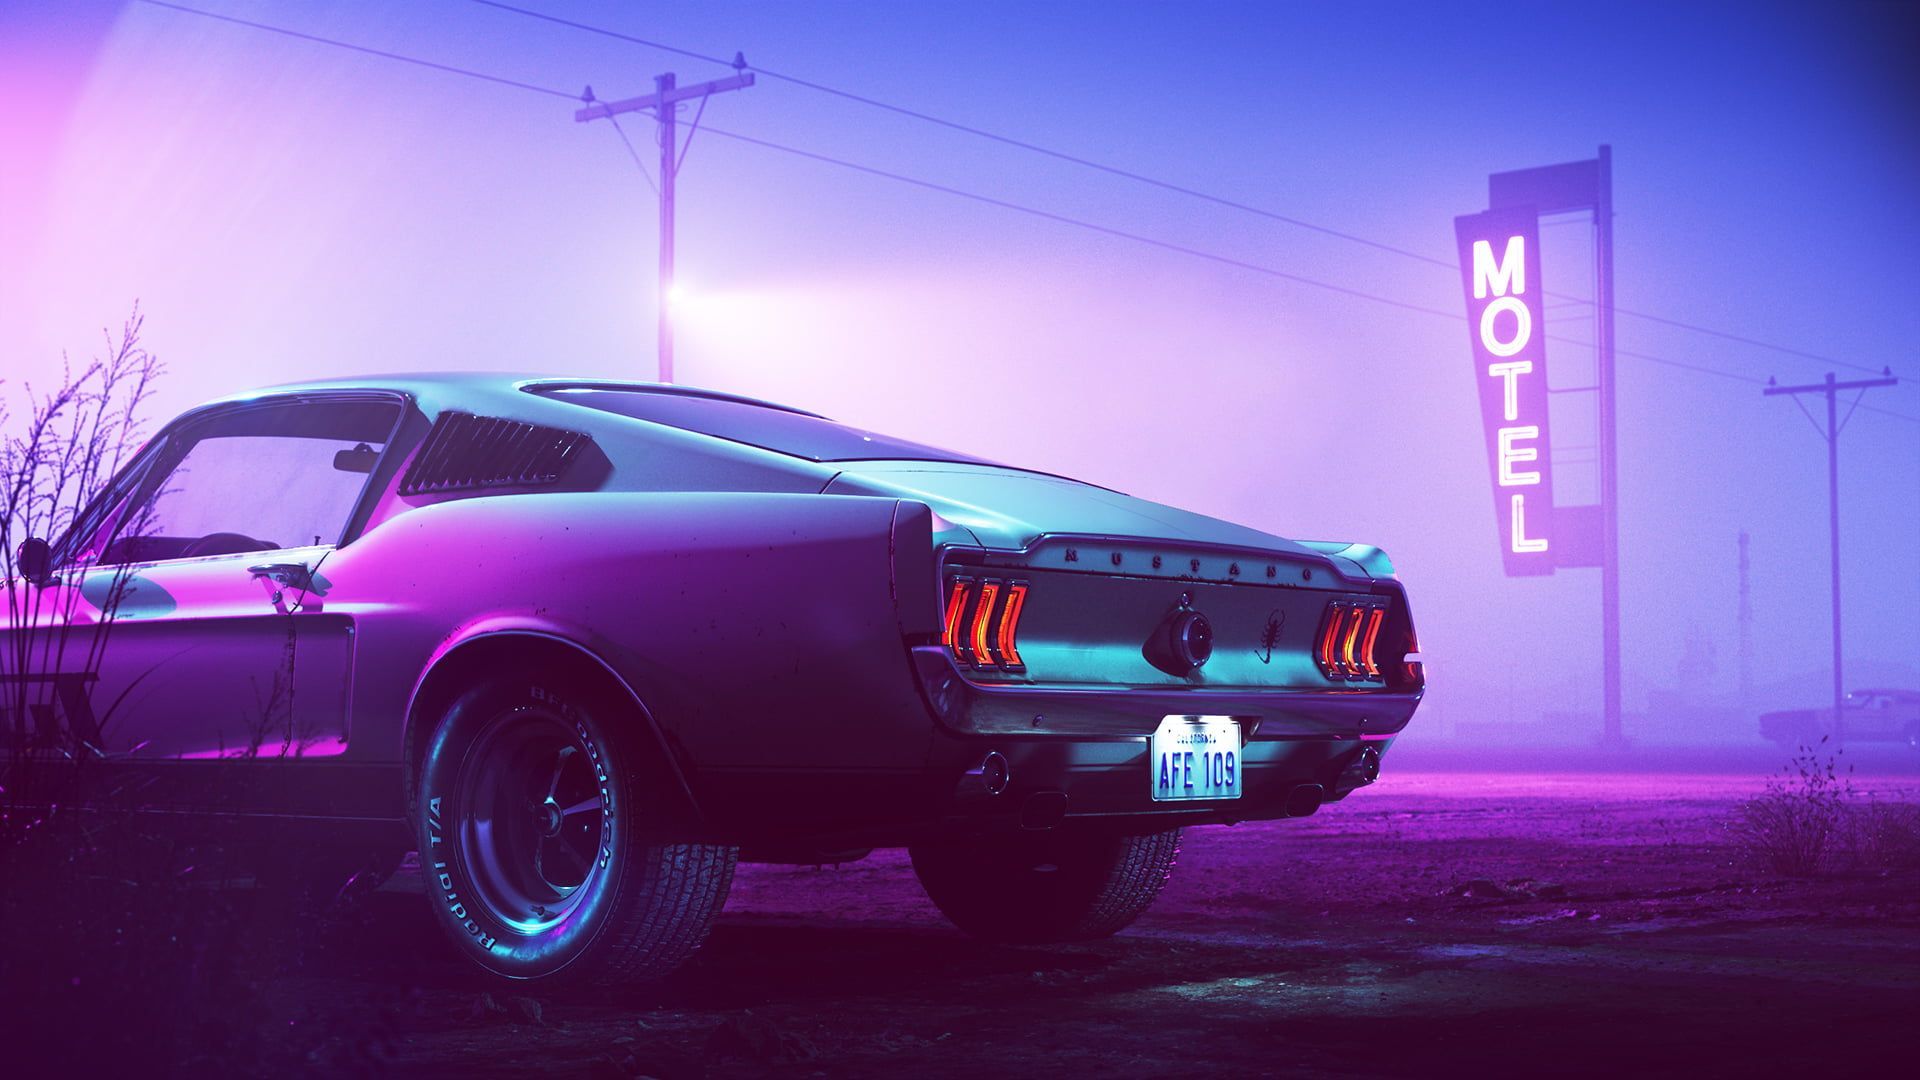 purple coupe 1965 Ford Mustang #photography #motel #mist P #wallpaper #hdwallpaper #desktop. Mustang wallpaper, Ford mustang wallpaper, Ford mustang